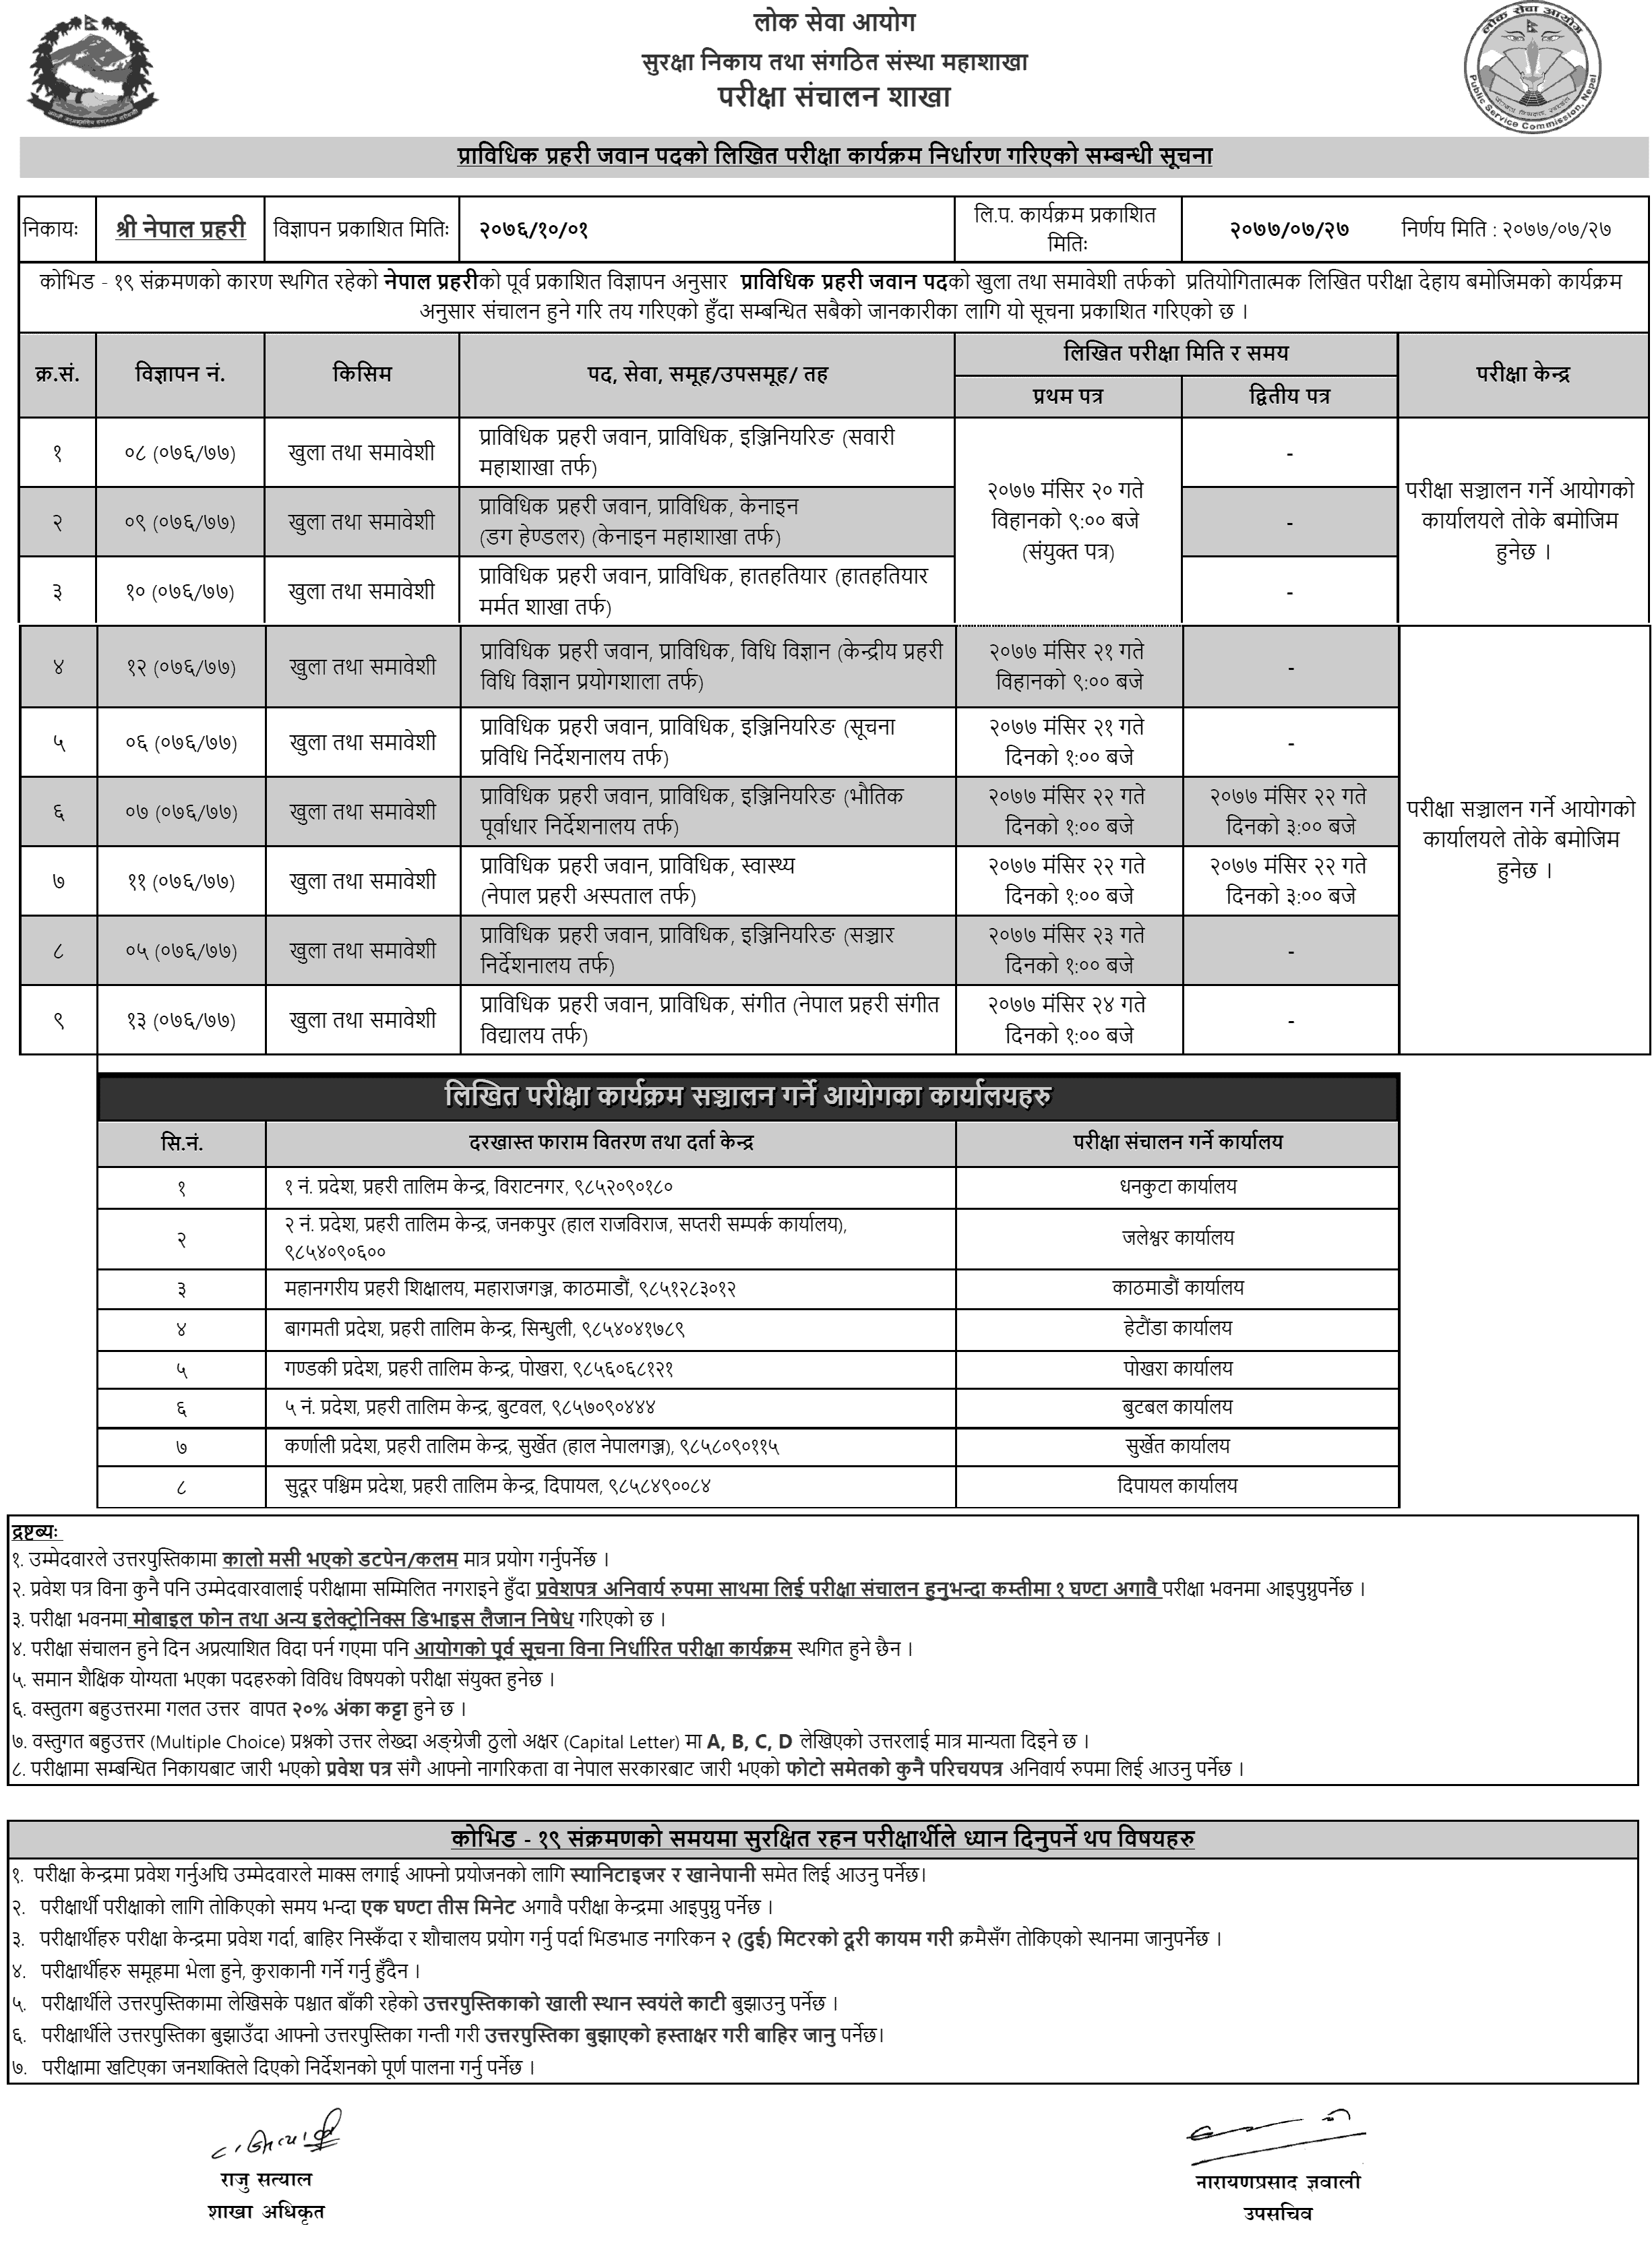 Nepal Police Jawan (Technical) Written Exam Schedule